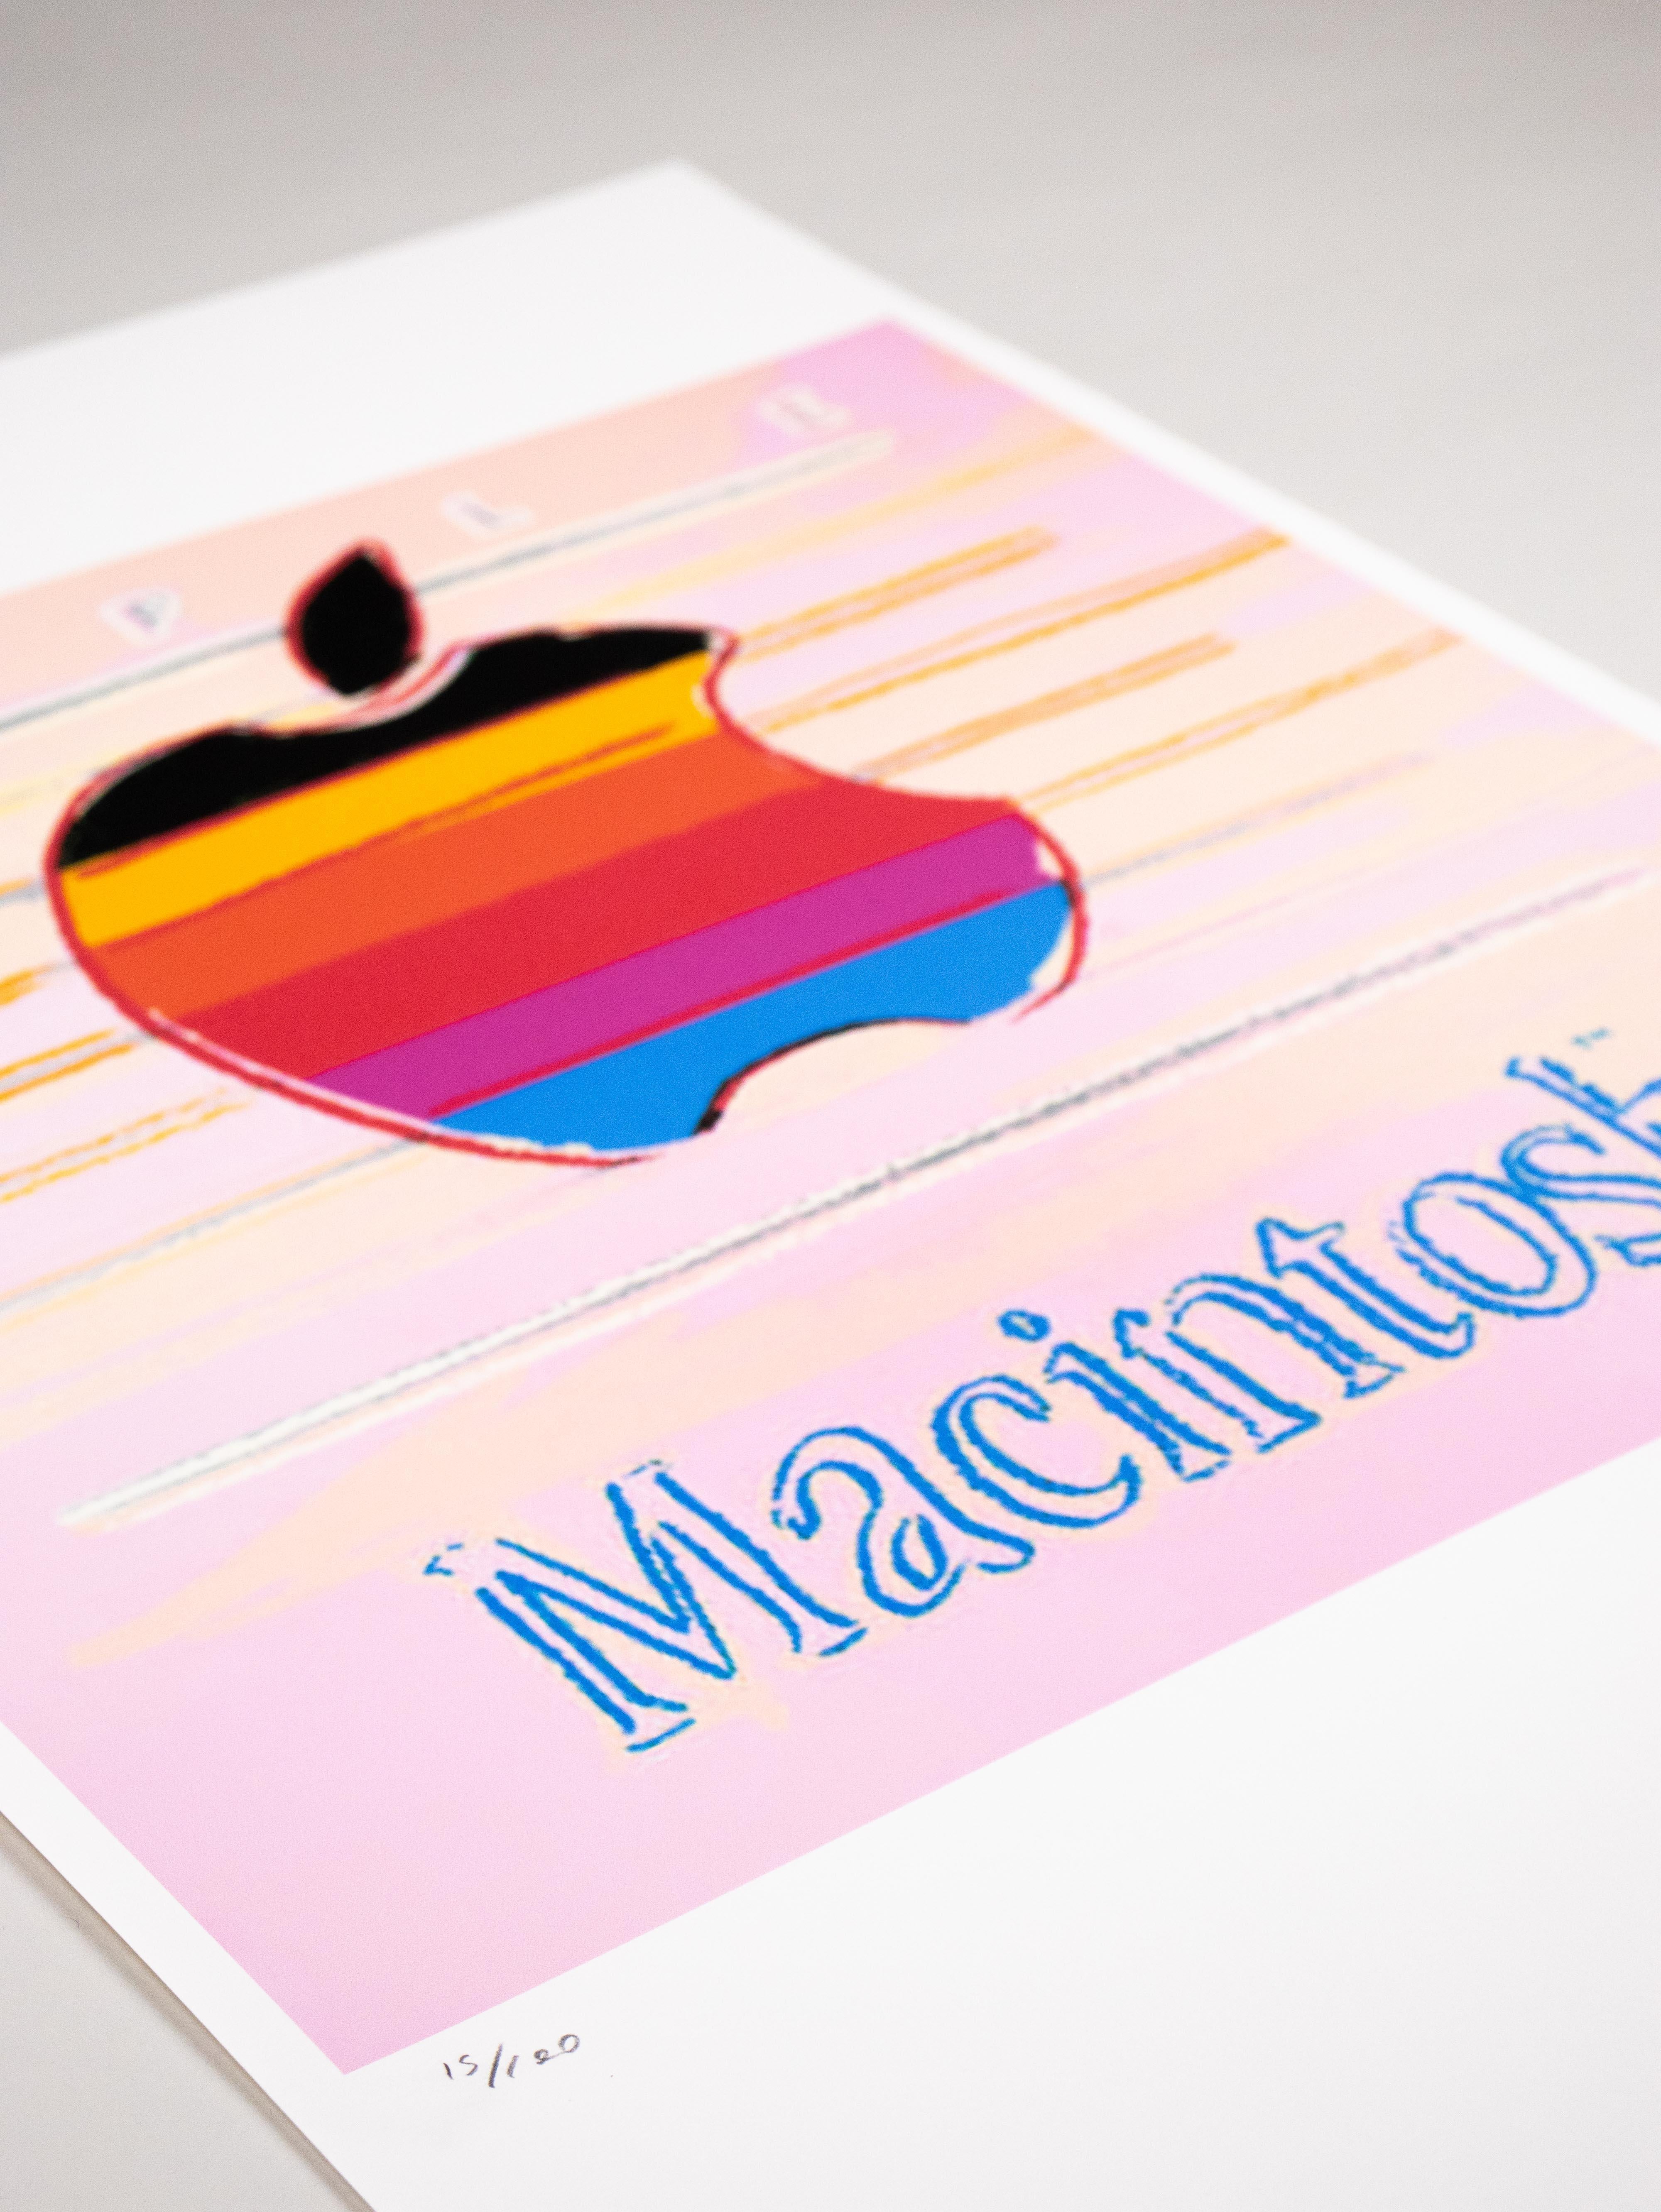 Apple Macintosh - 1983 - Original Lithograph - Limited Edition Print - 15/100 5